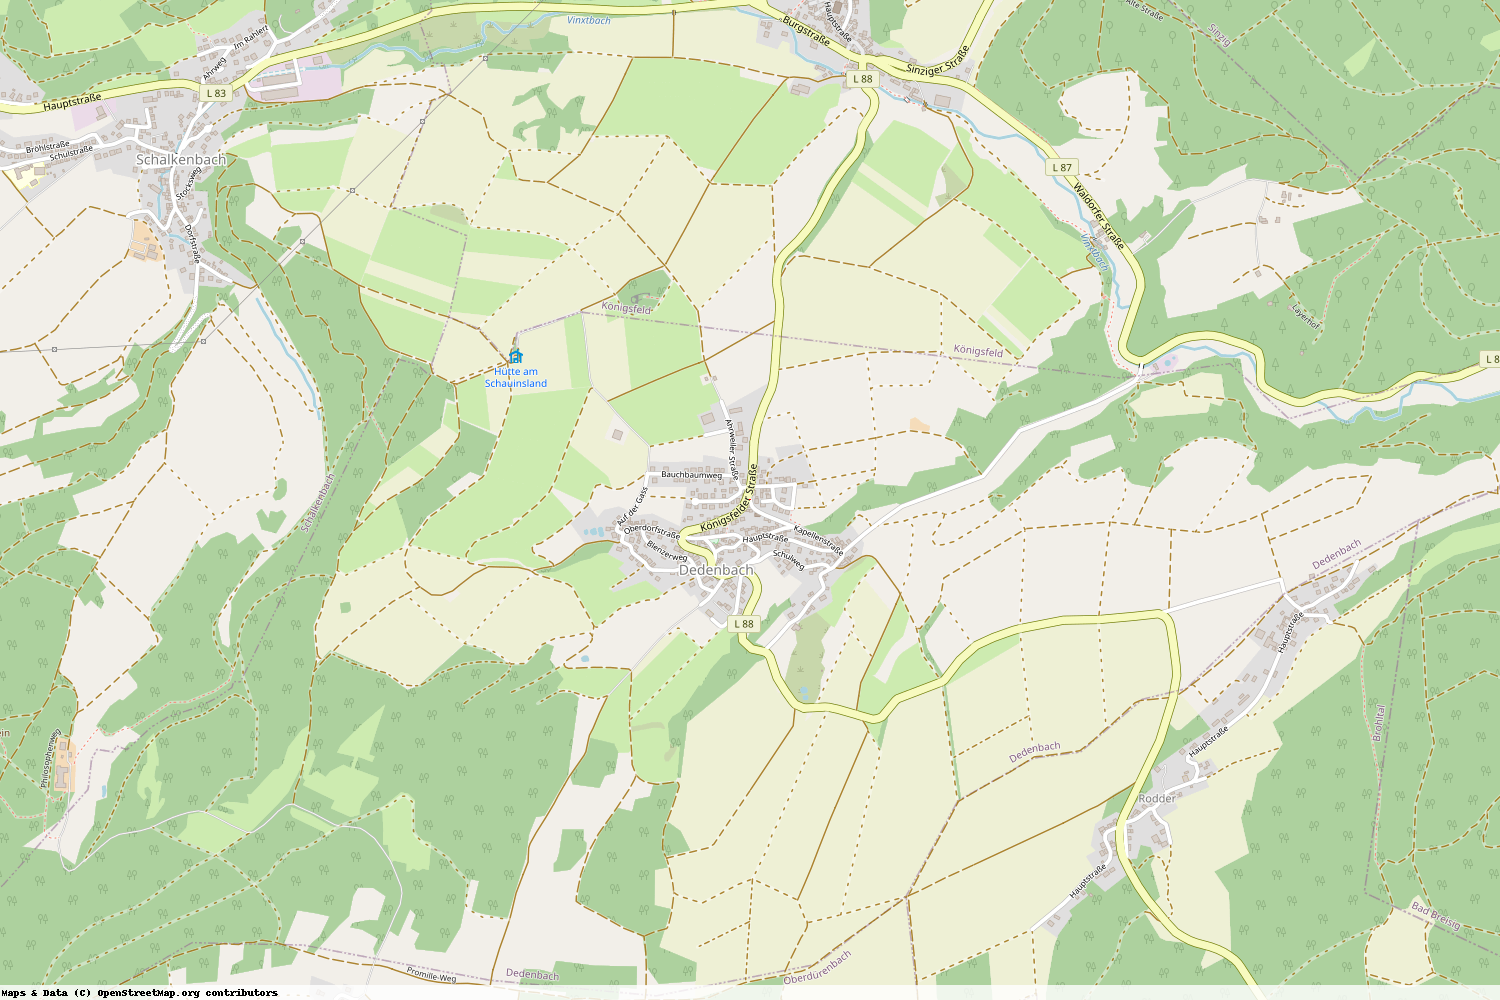 Ist gerade Stromausfall in Rheinland-Pfalz - Ahrweiler - Dedenbach?